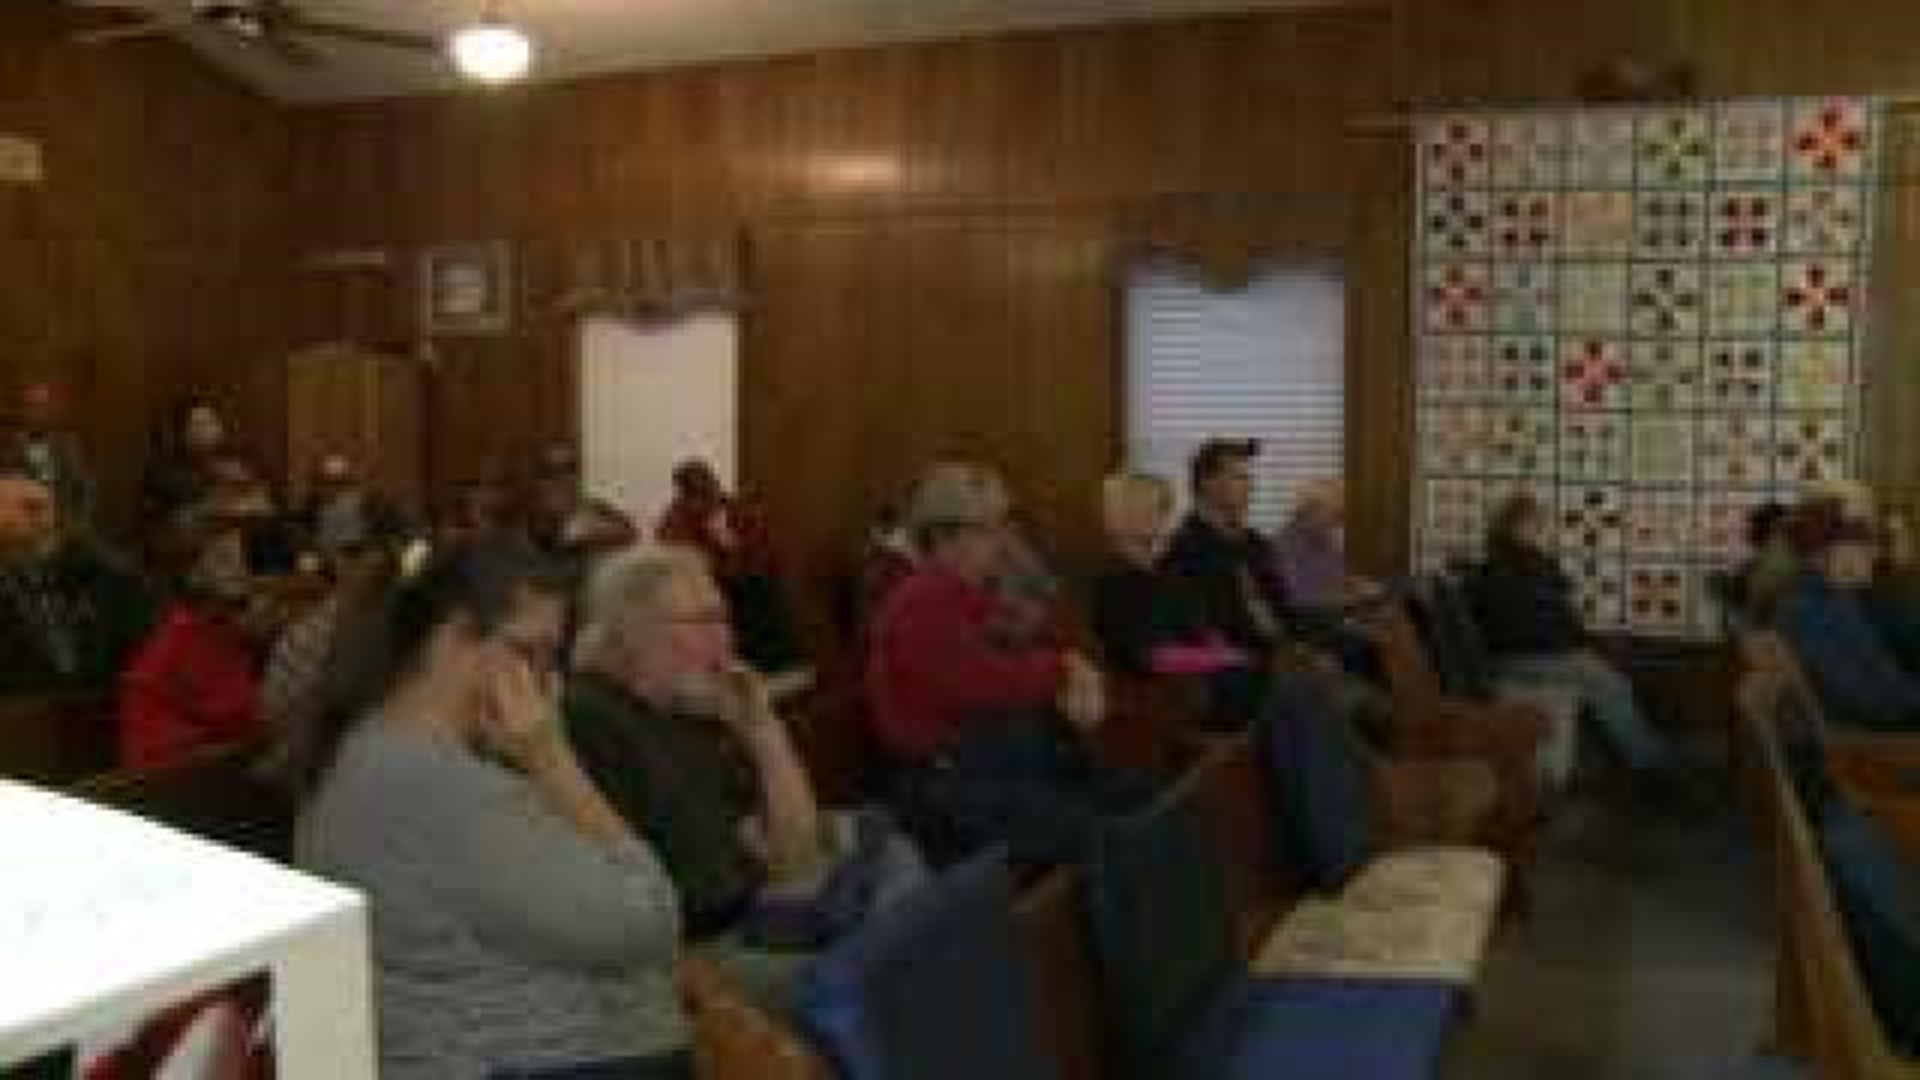 Annexation Worries River Valley Community